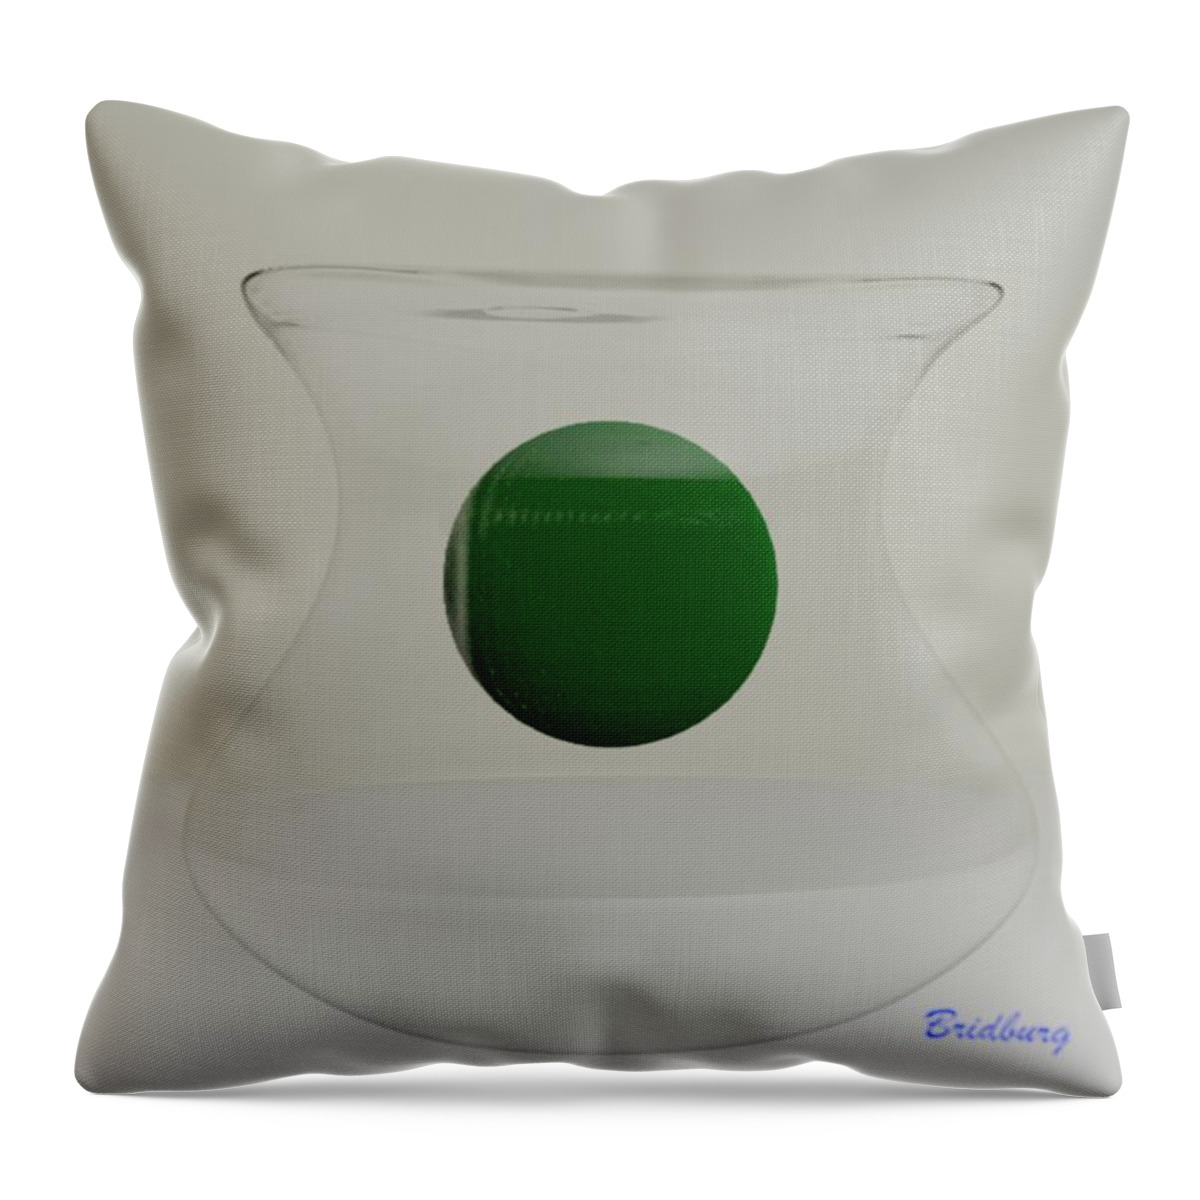  Throw Pillow featuring the digital art 201 Spittoon by David Bridburg